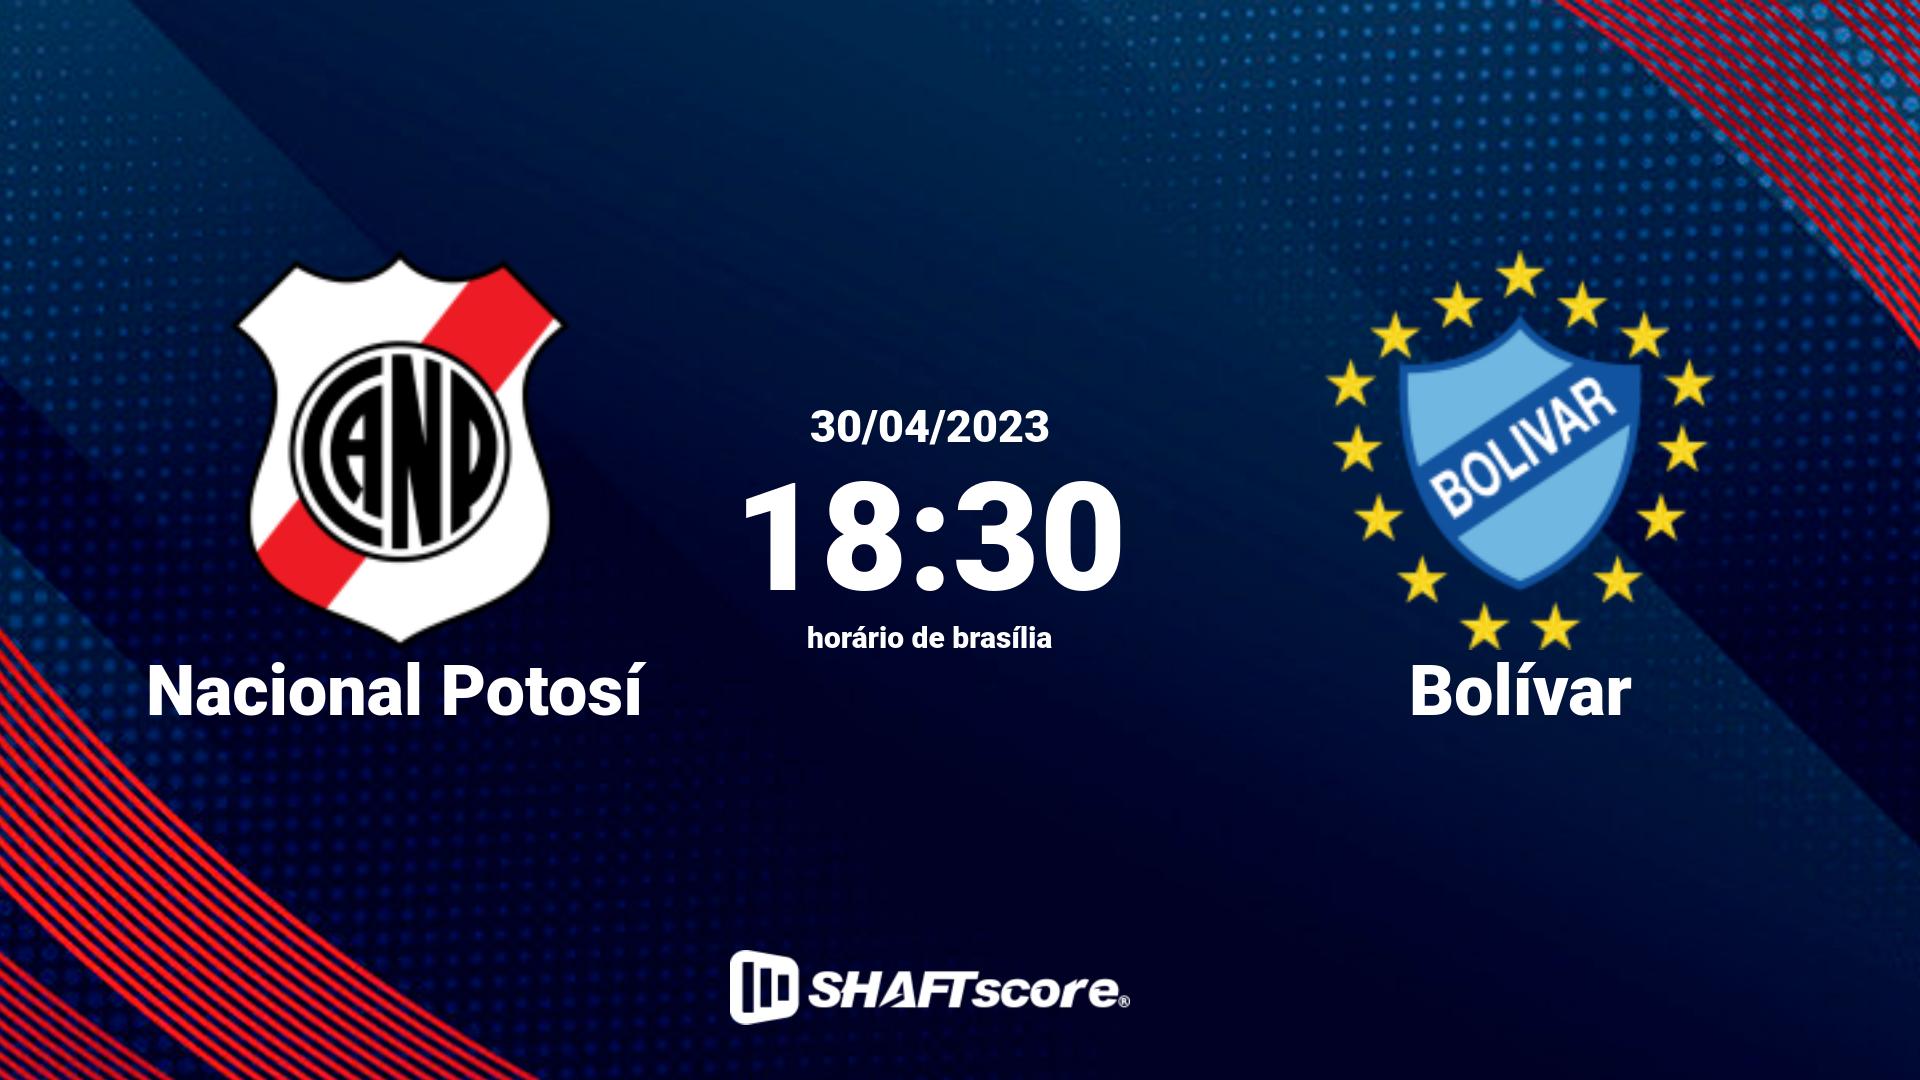 Estatísticas do jogo Nacional Potosí vs Bolívar 30.04 18:30